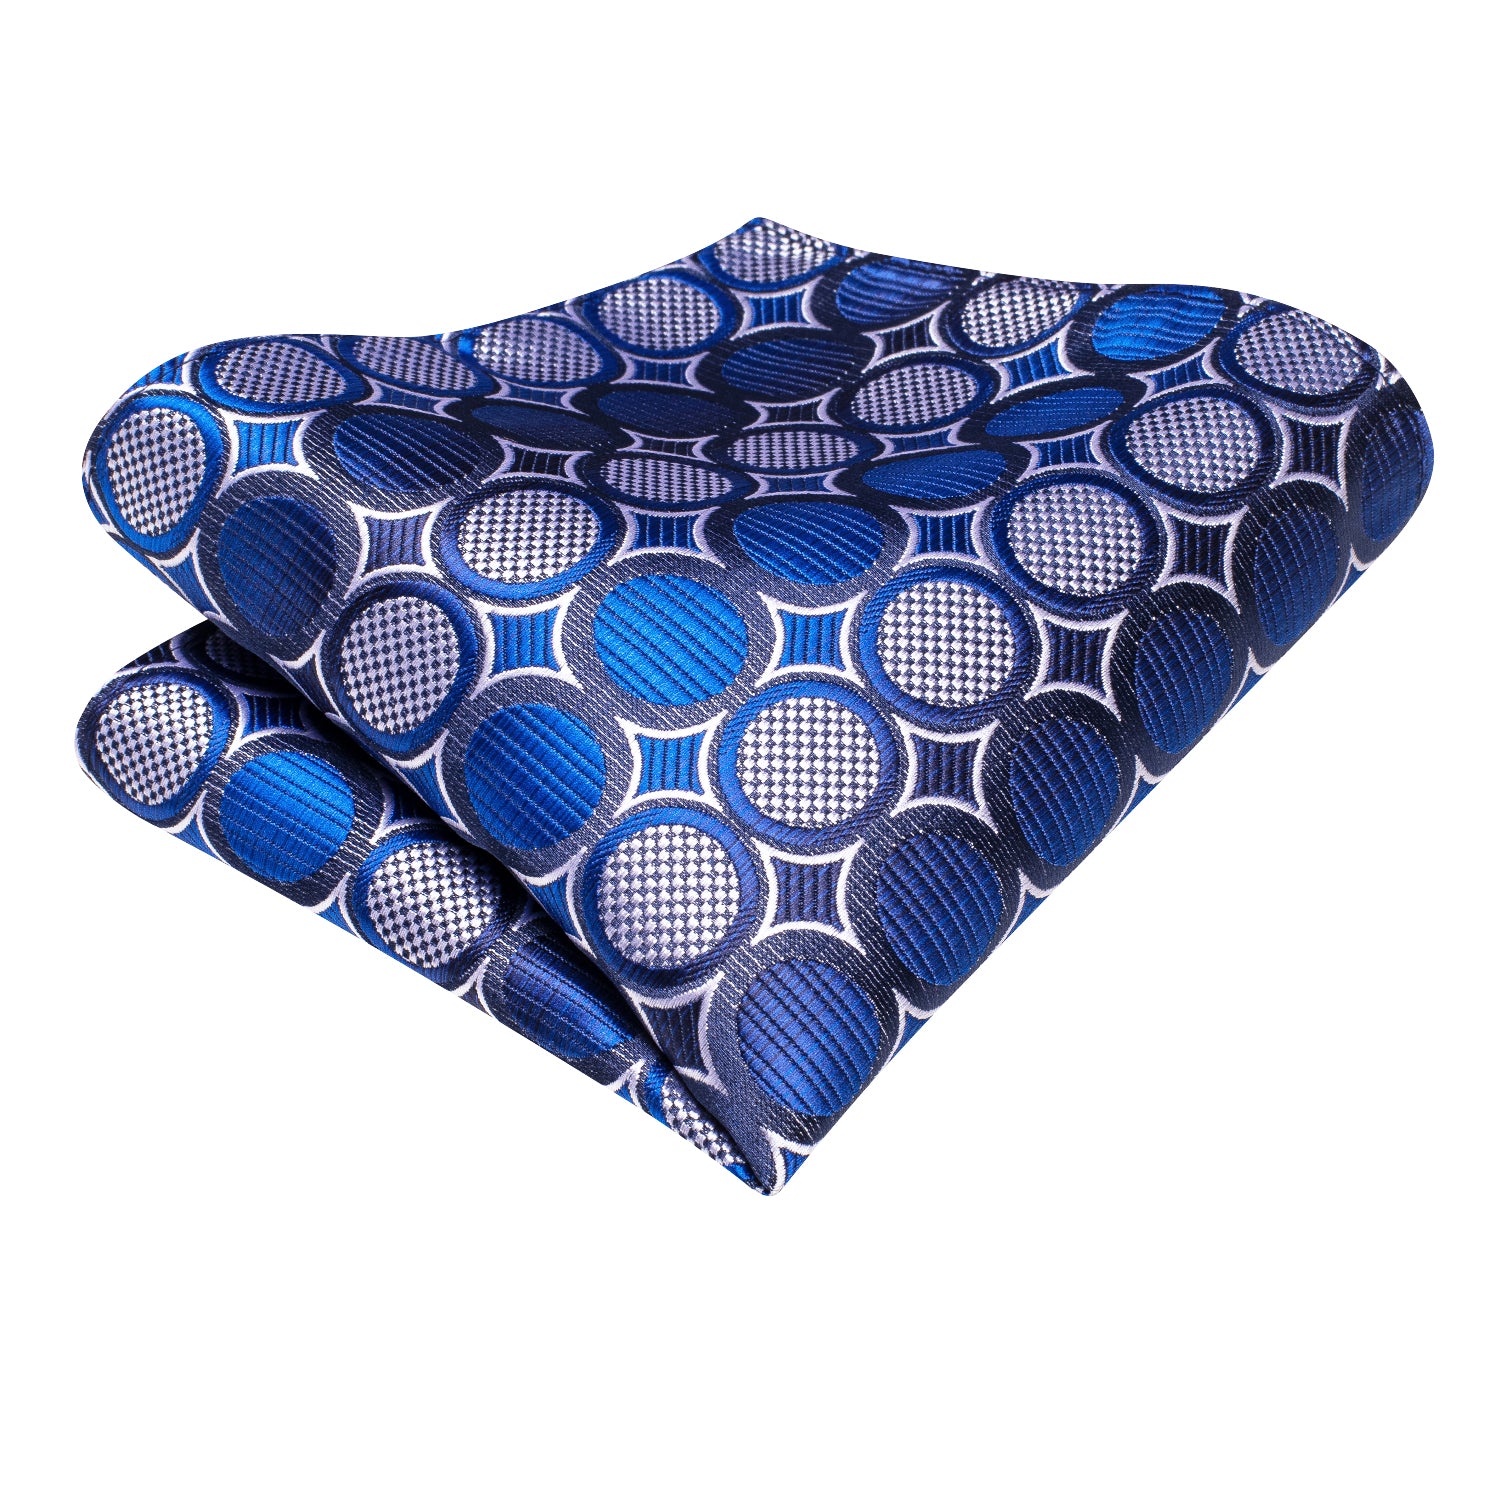 New Royal Blue White Circle Tie Pocket Square Cufflinks Set